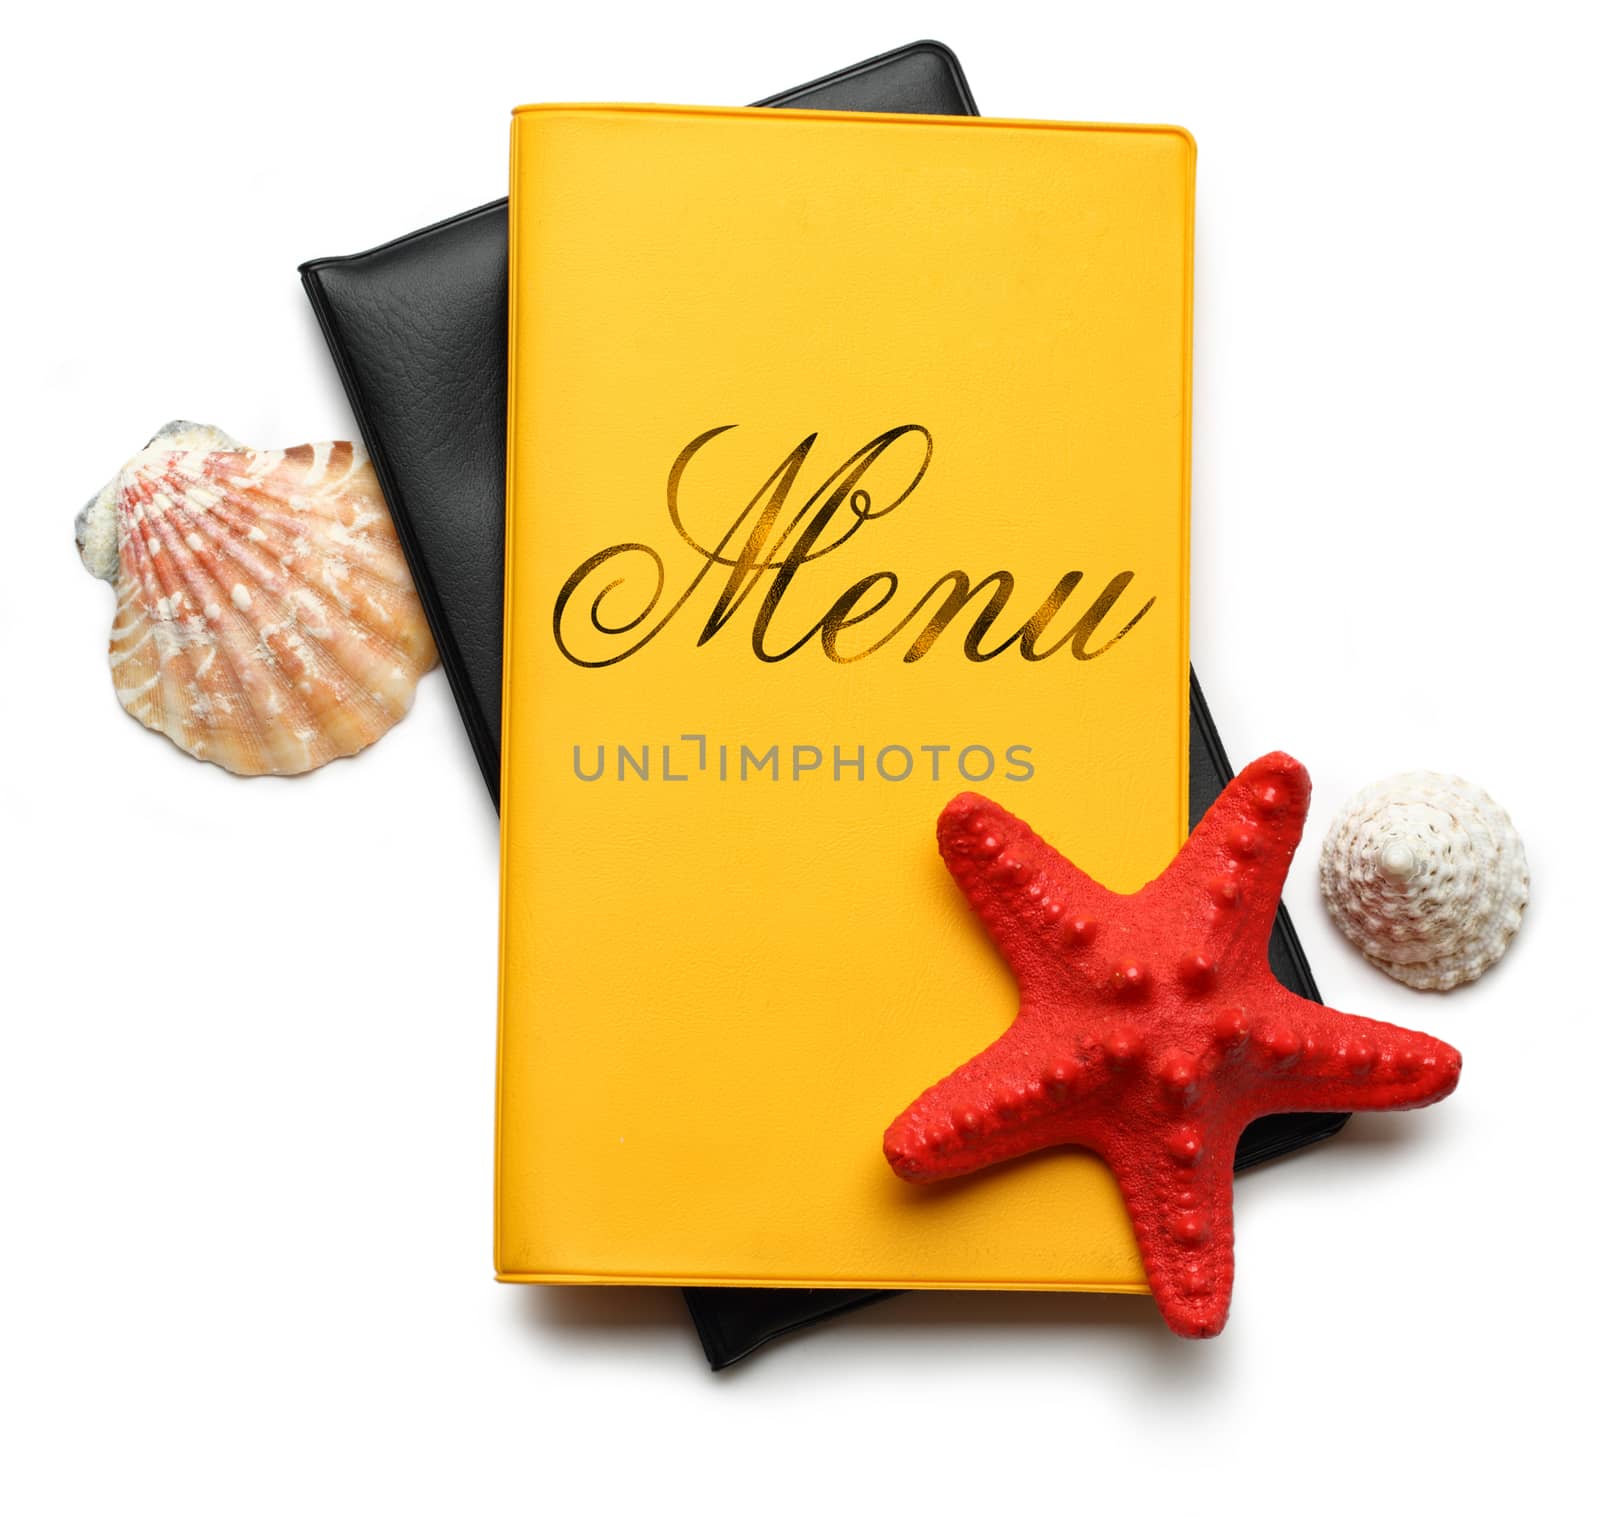 Seashells on menu book by Garsya